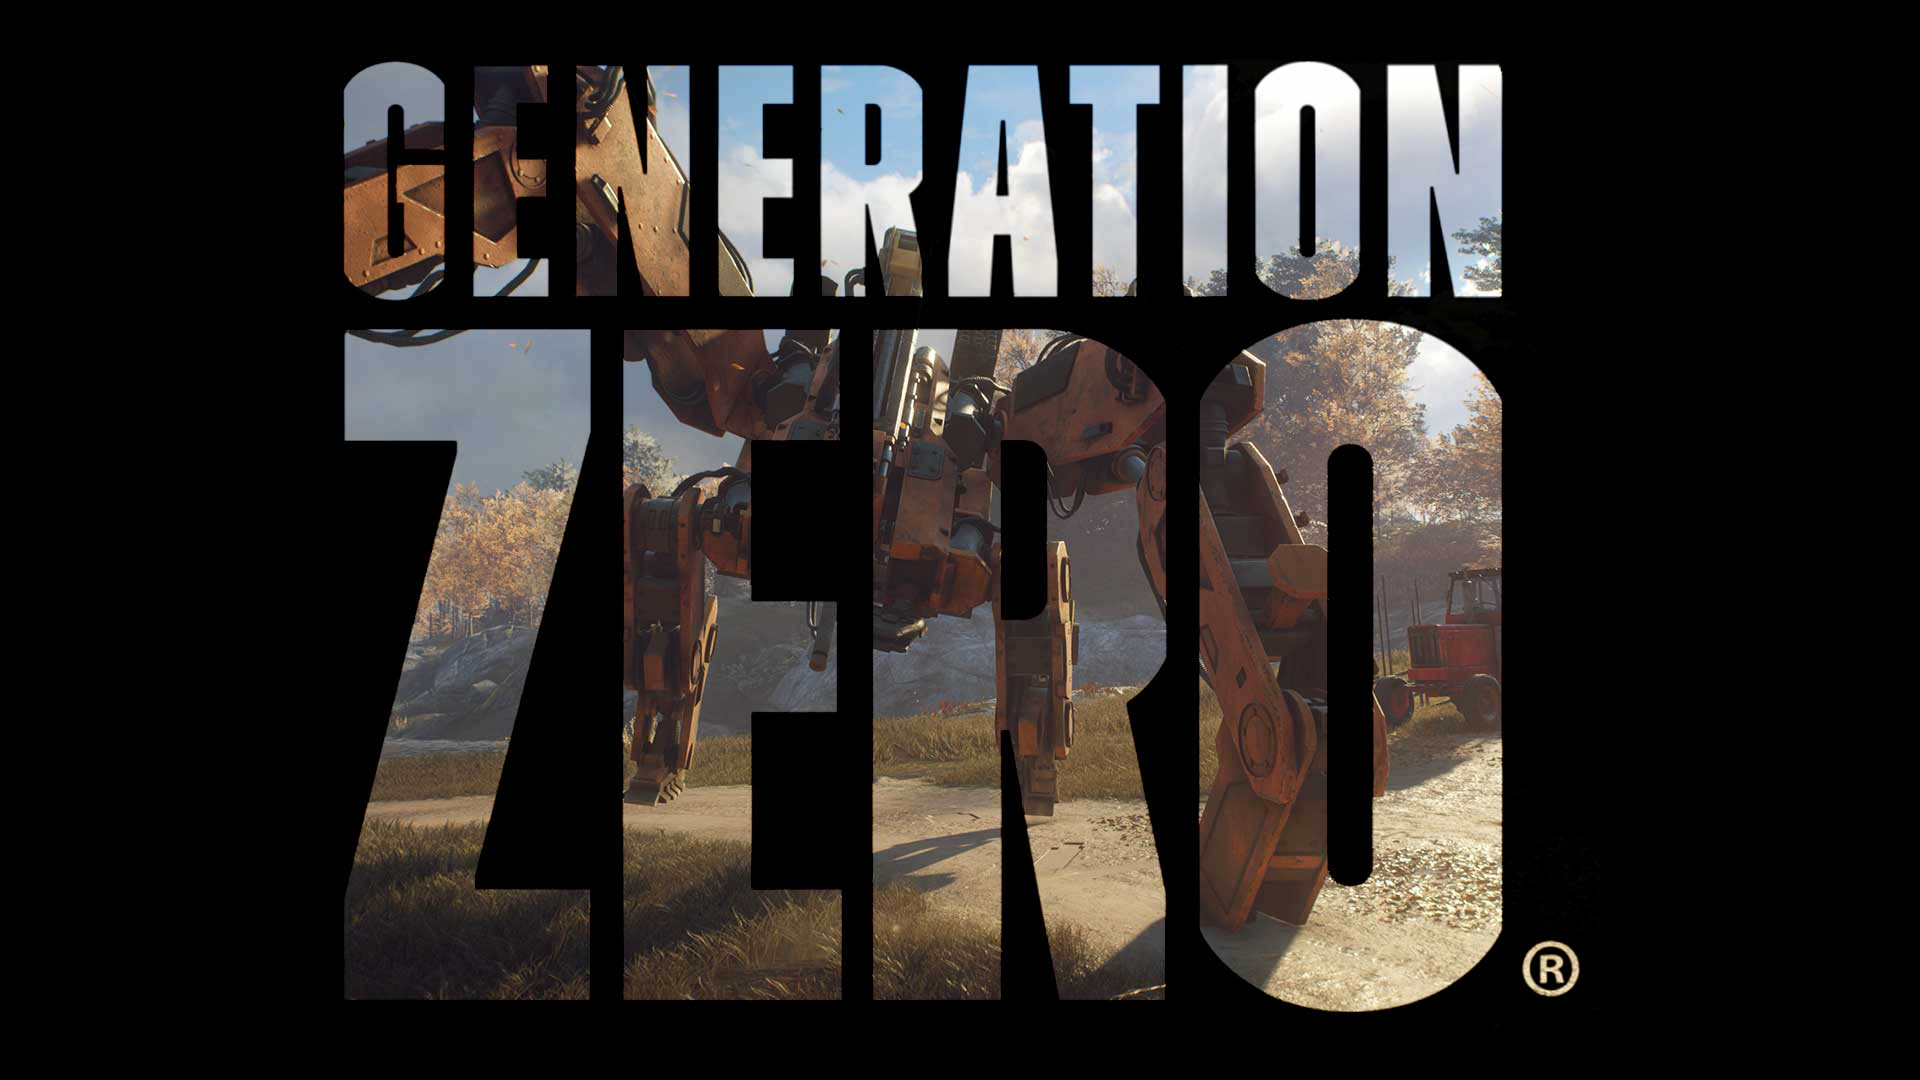 A Tribute to Generation Zero